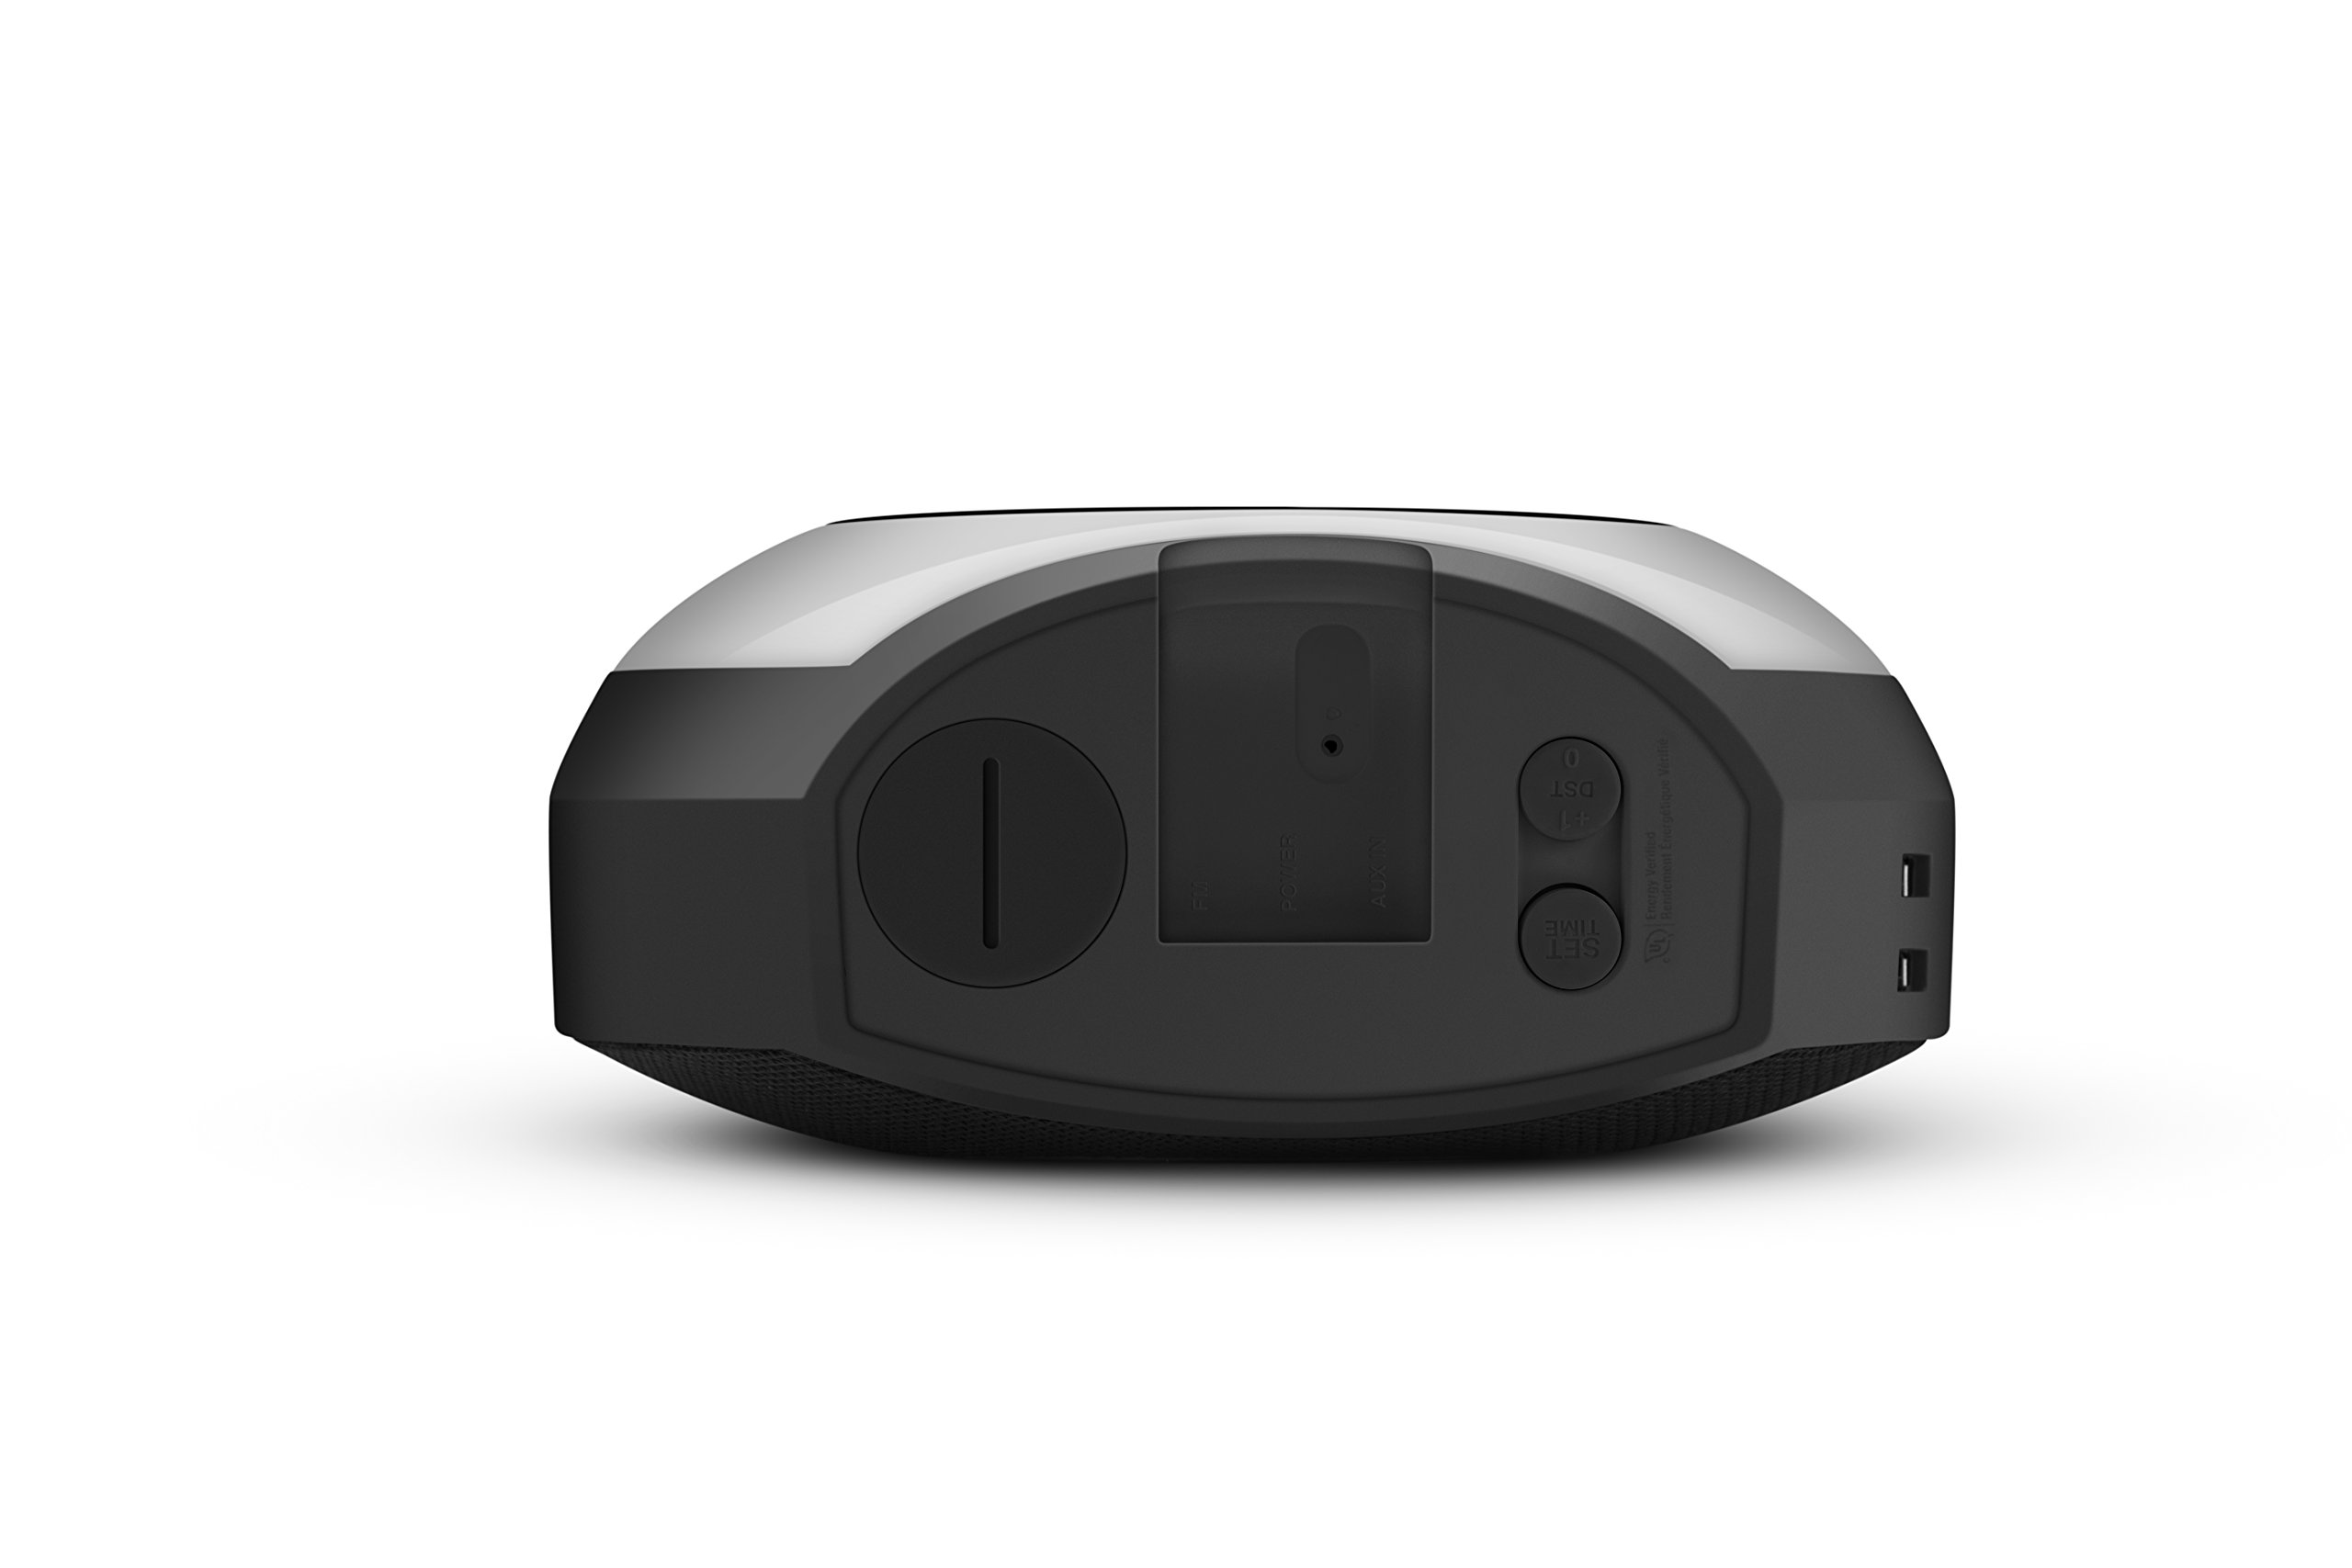 JBL Horizon - Bluetooth Clock Radio with USB Charging and Ambient Light - Black